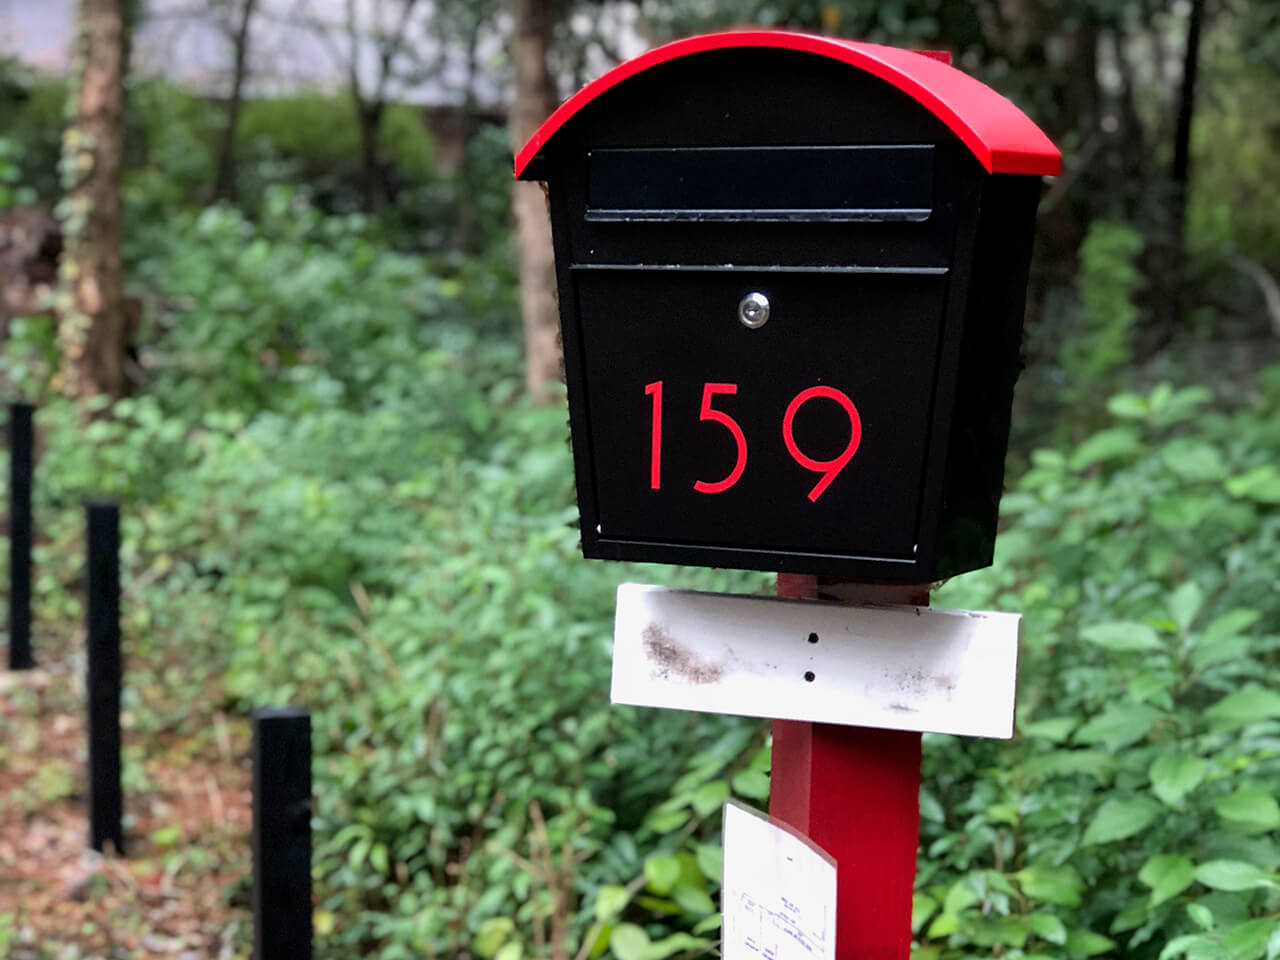 159 Blue Island Mailbox - looking west